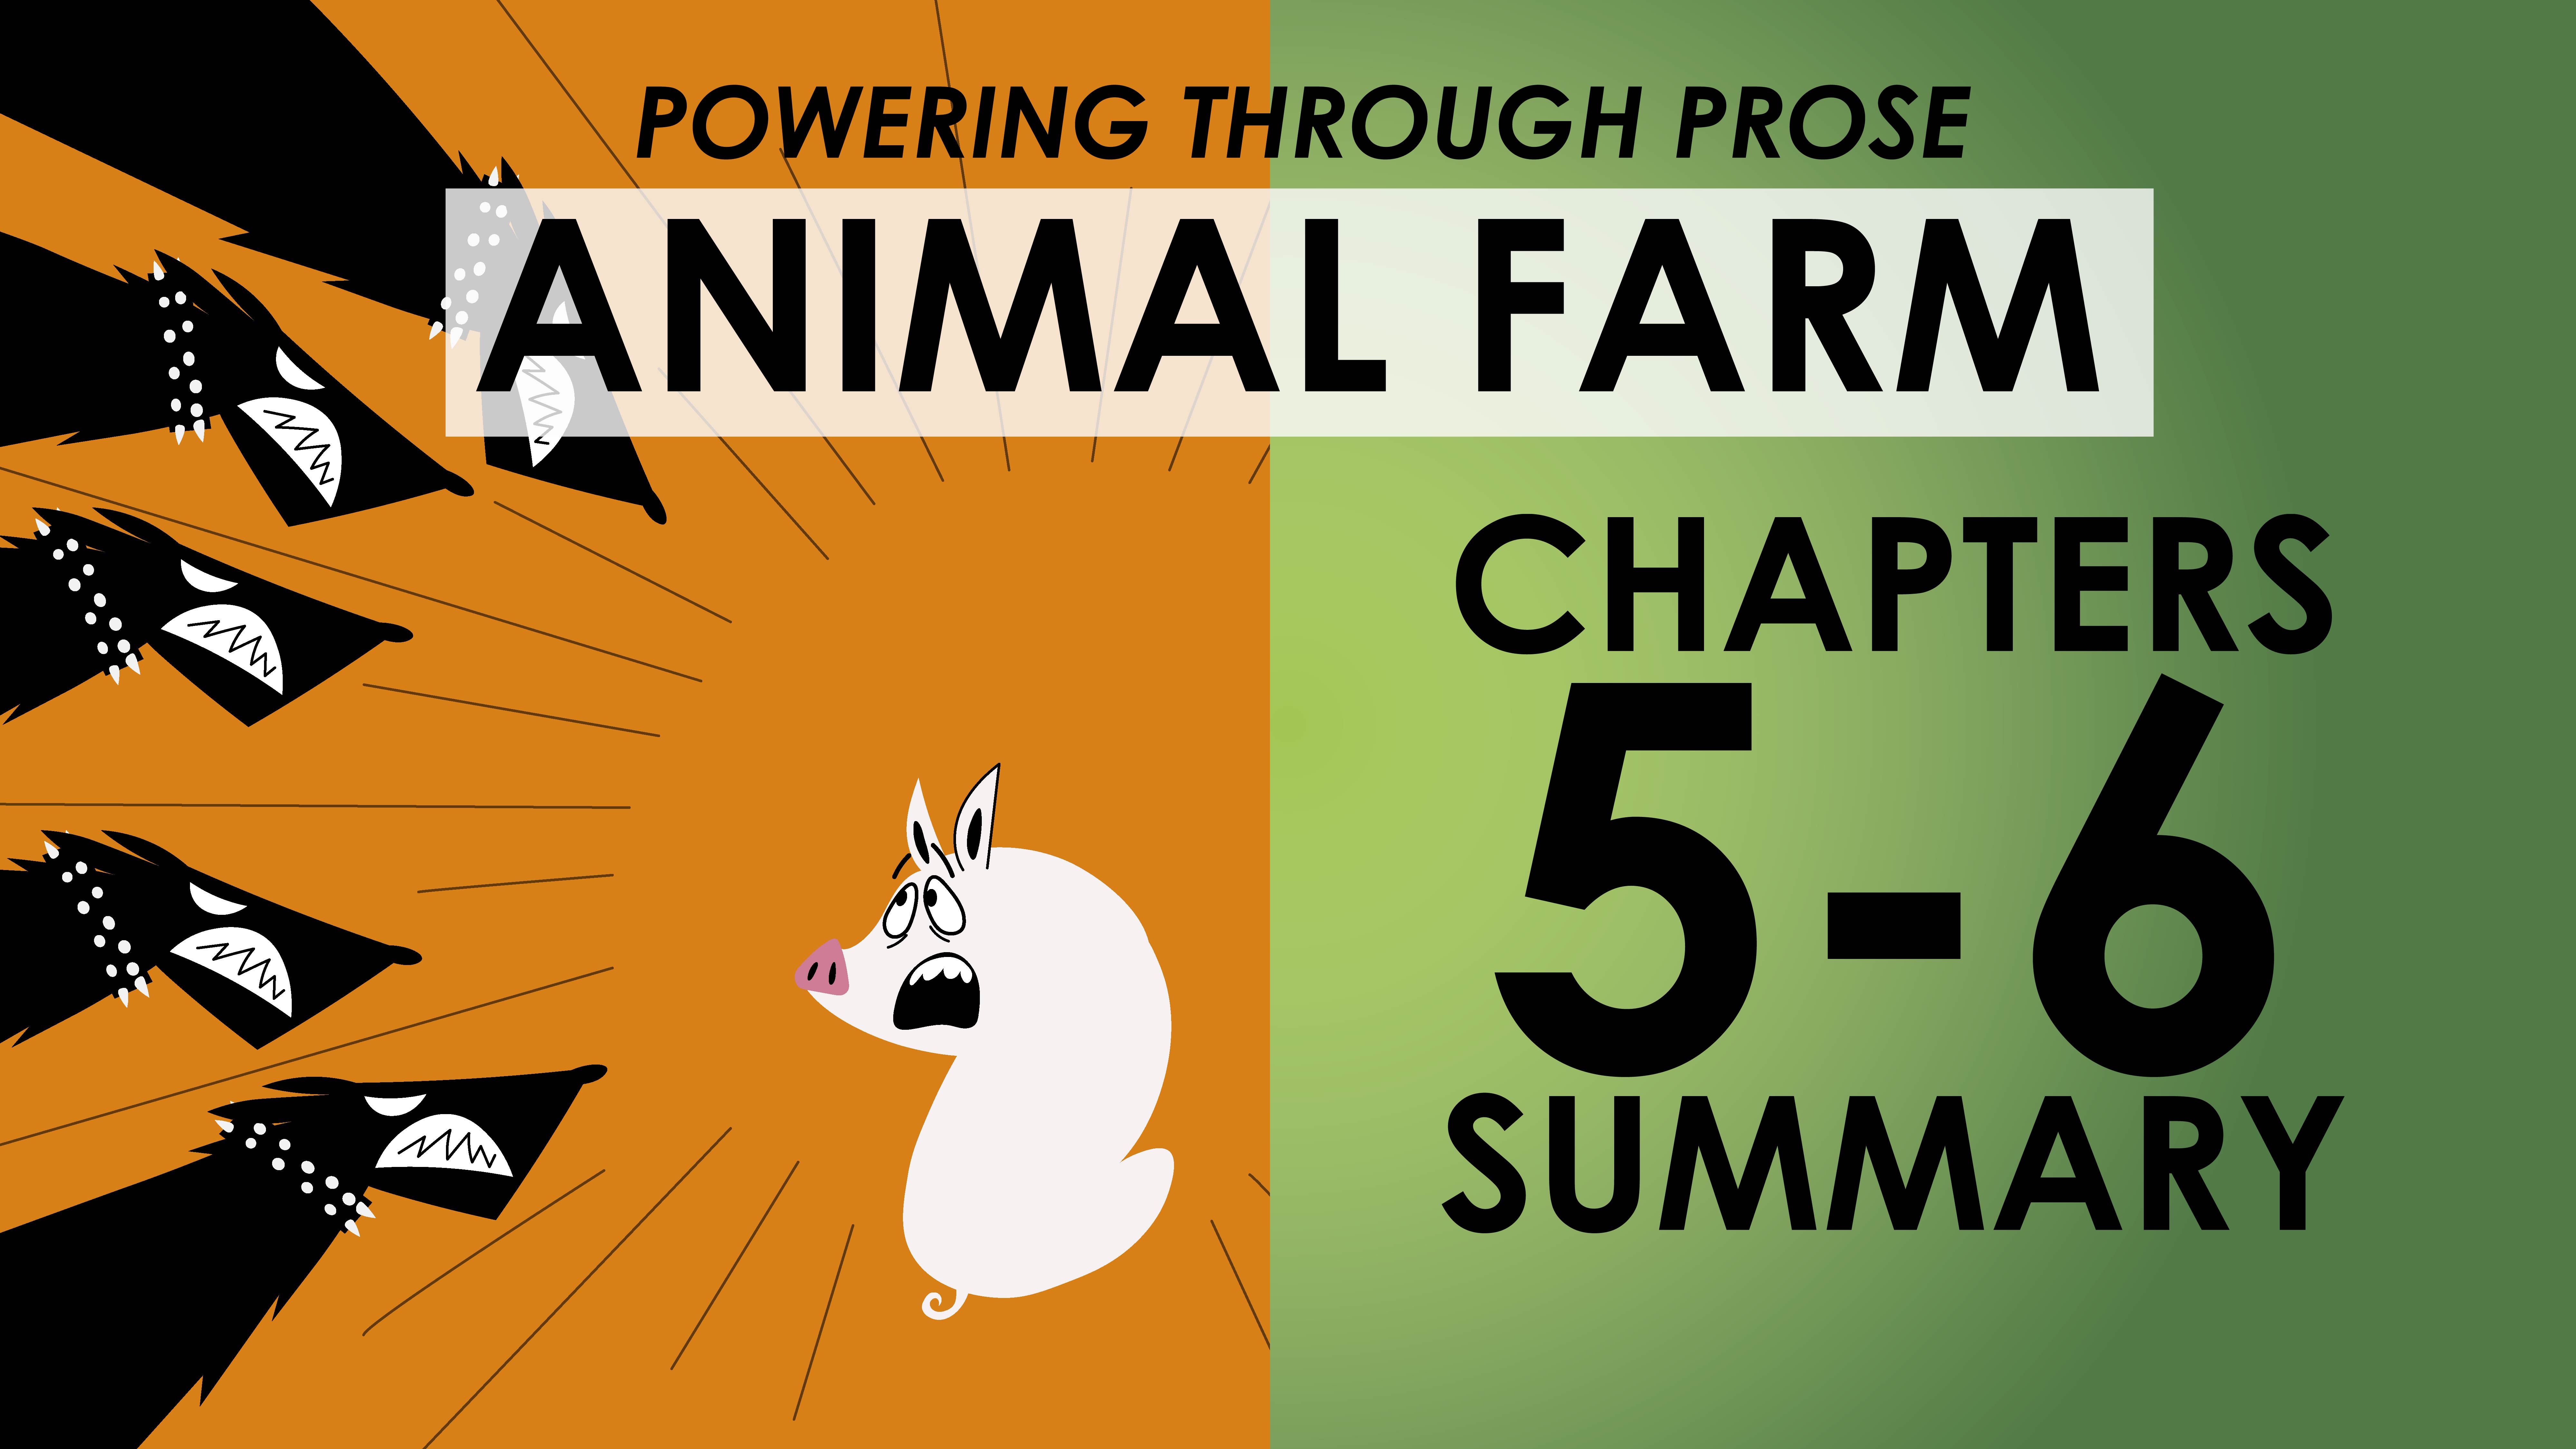 Animal Farm - George Orwell - Chapters 5-6 Summary - Powering Through Prose Series